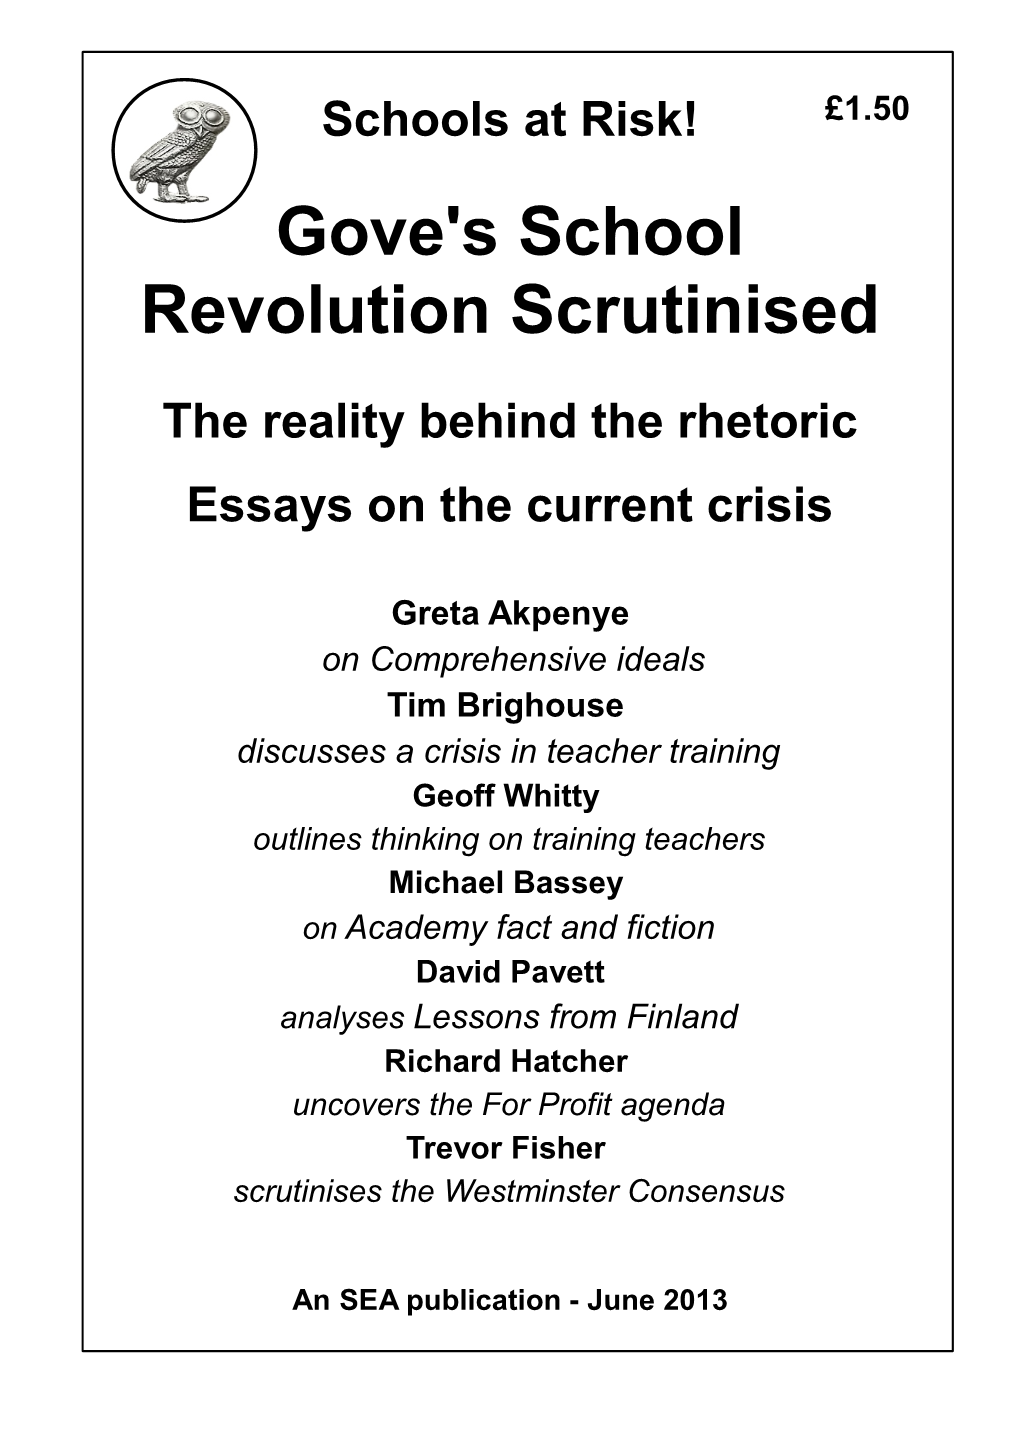 Gove's School Revolution Scrutinised